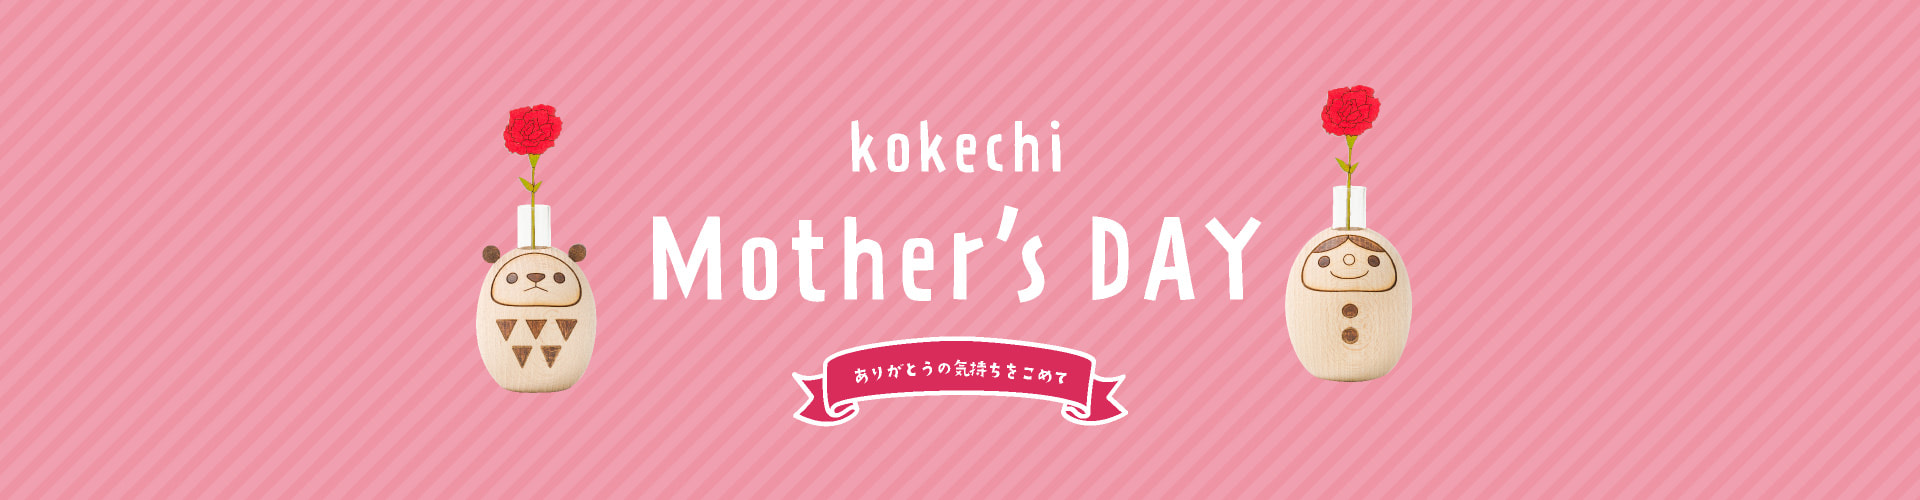 kokechi Mother's DAY ありがとうの気持ちをこめて